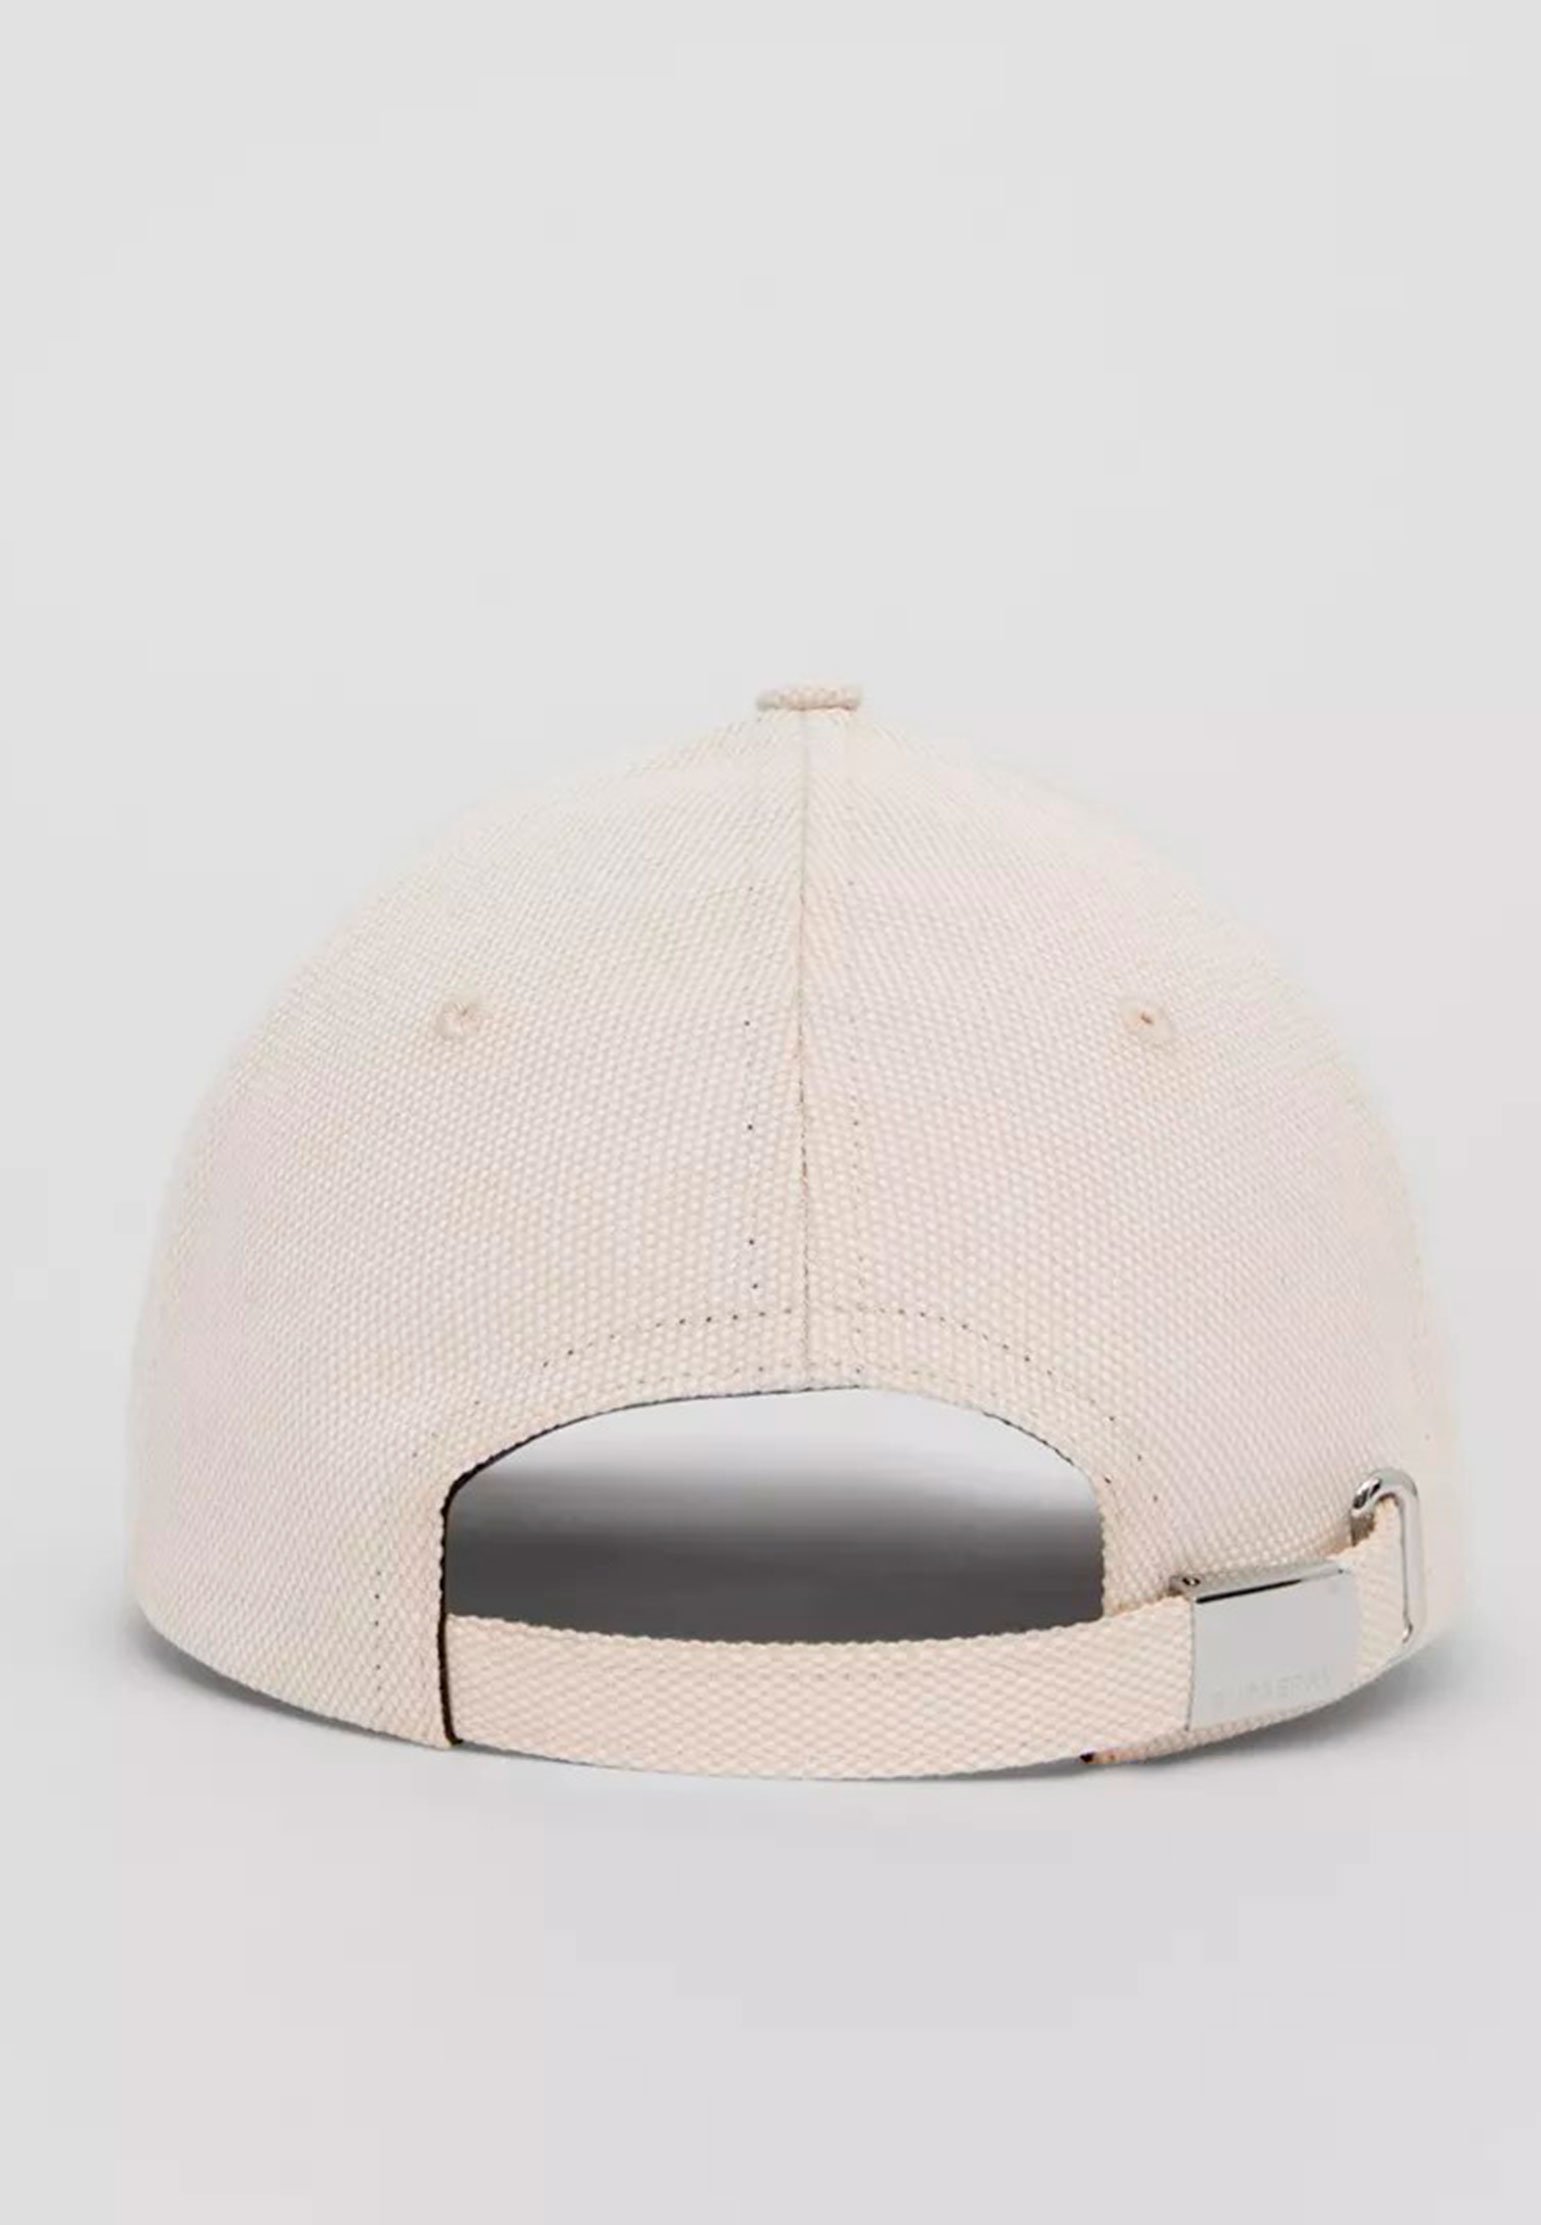 Baseball cap BURBERRY Color: beige (Code: 923) in online store Allure